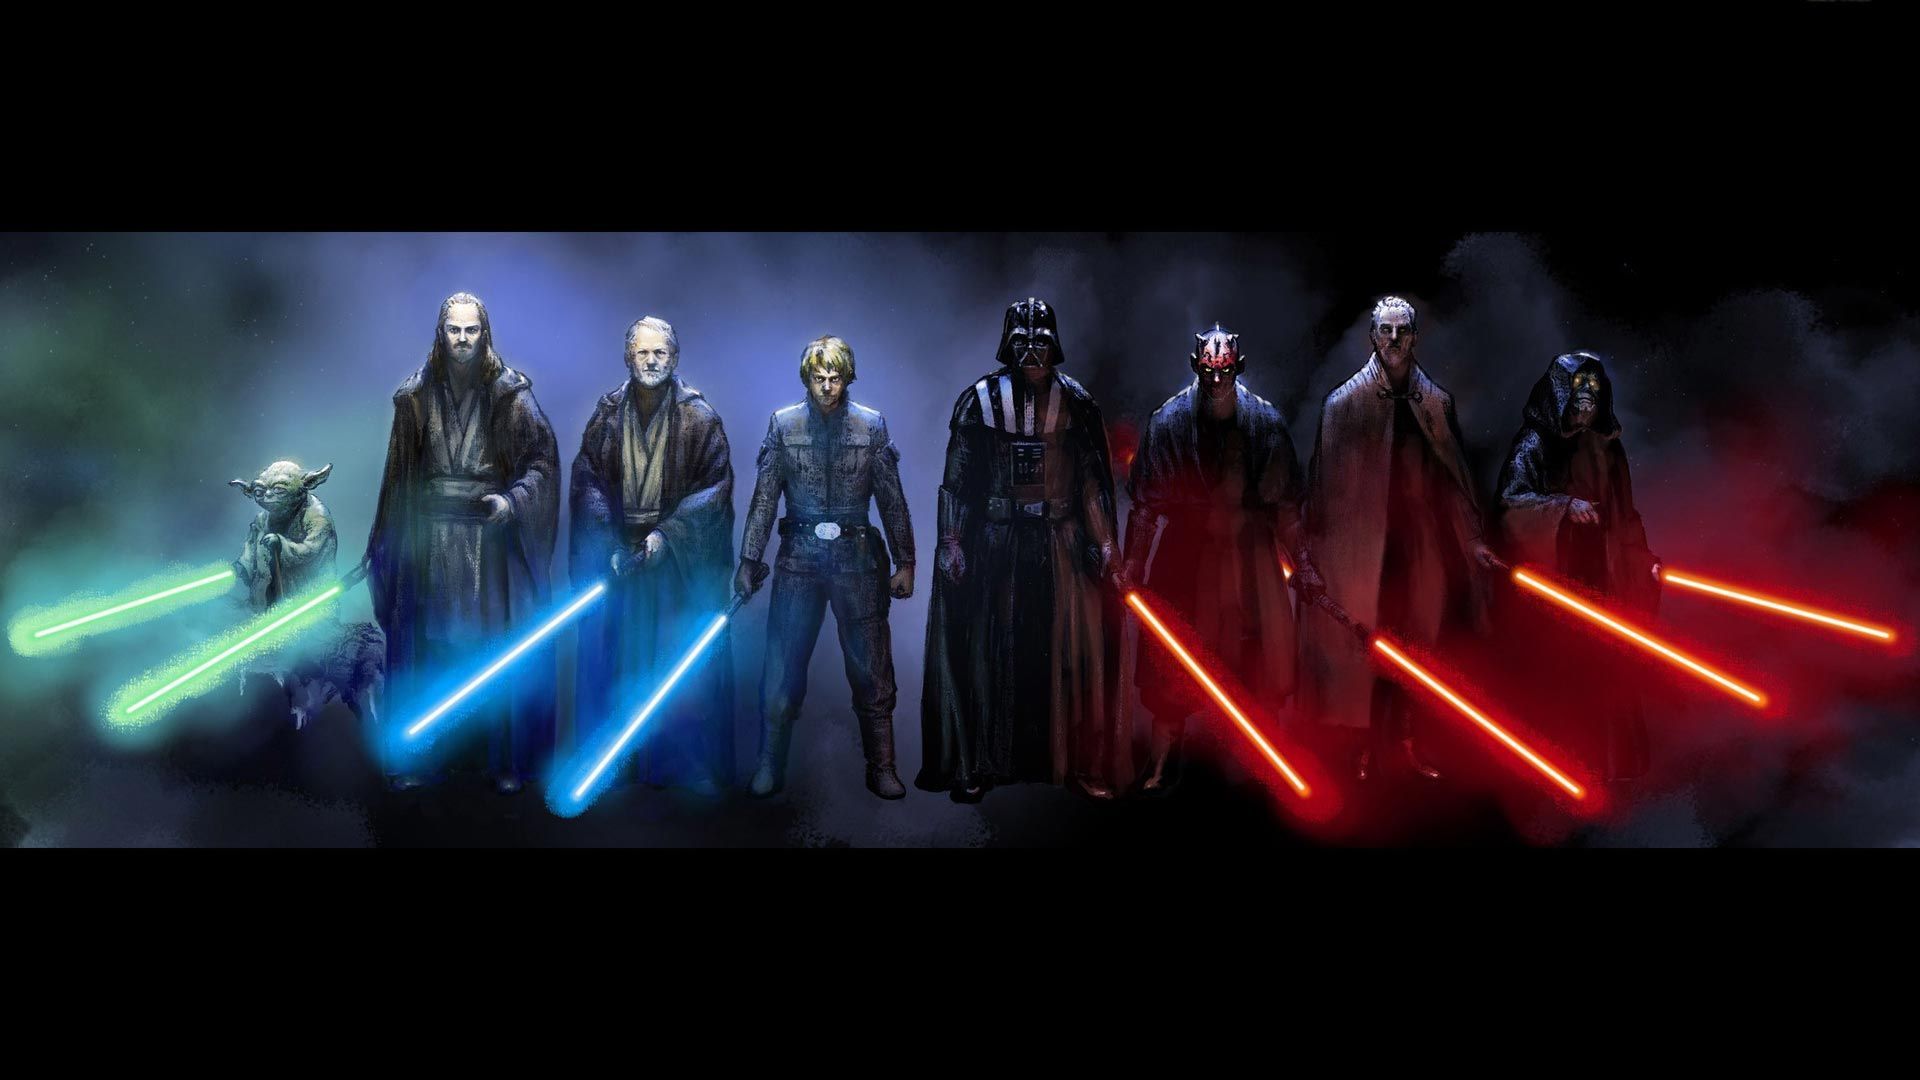 Jedi And Sith Star Wars Movie Wallpaper. Star wars image, Star wars sith, Star wars picture